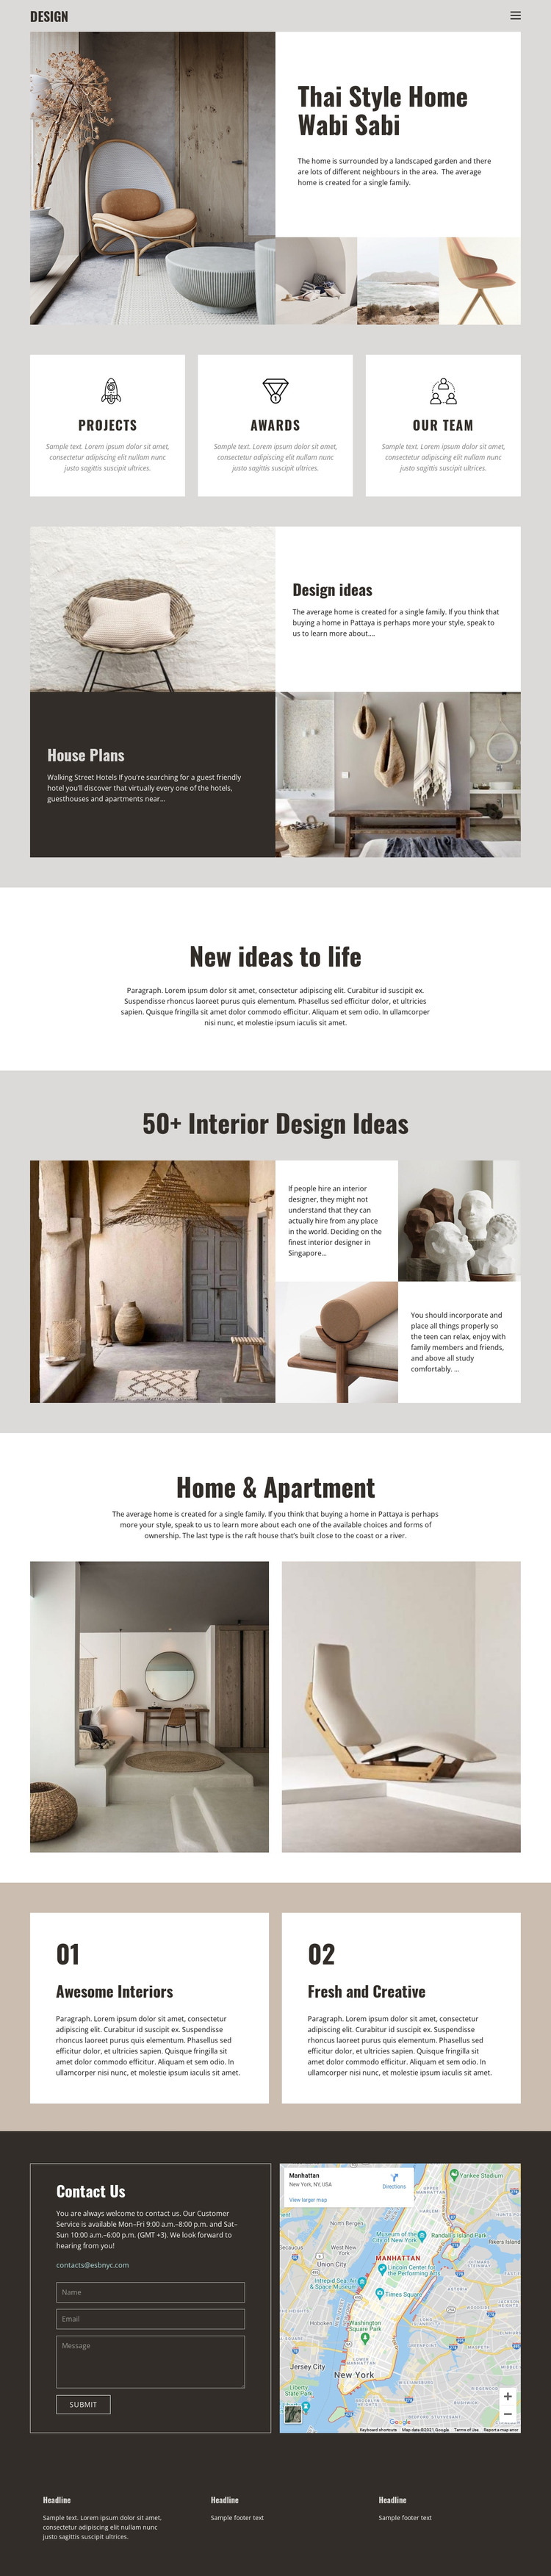 Thai style for home design Web Design